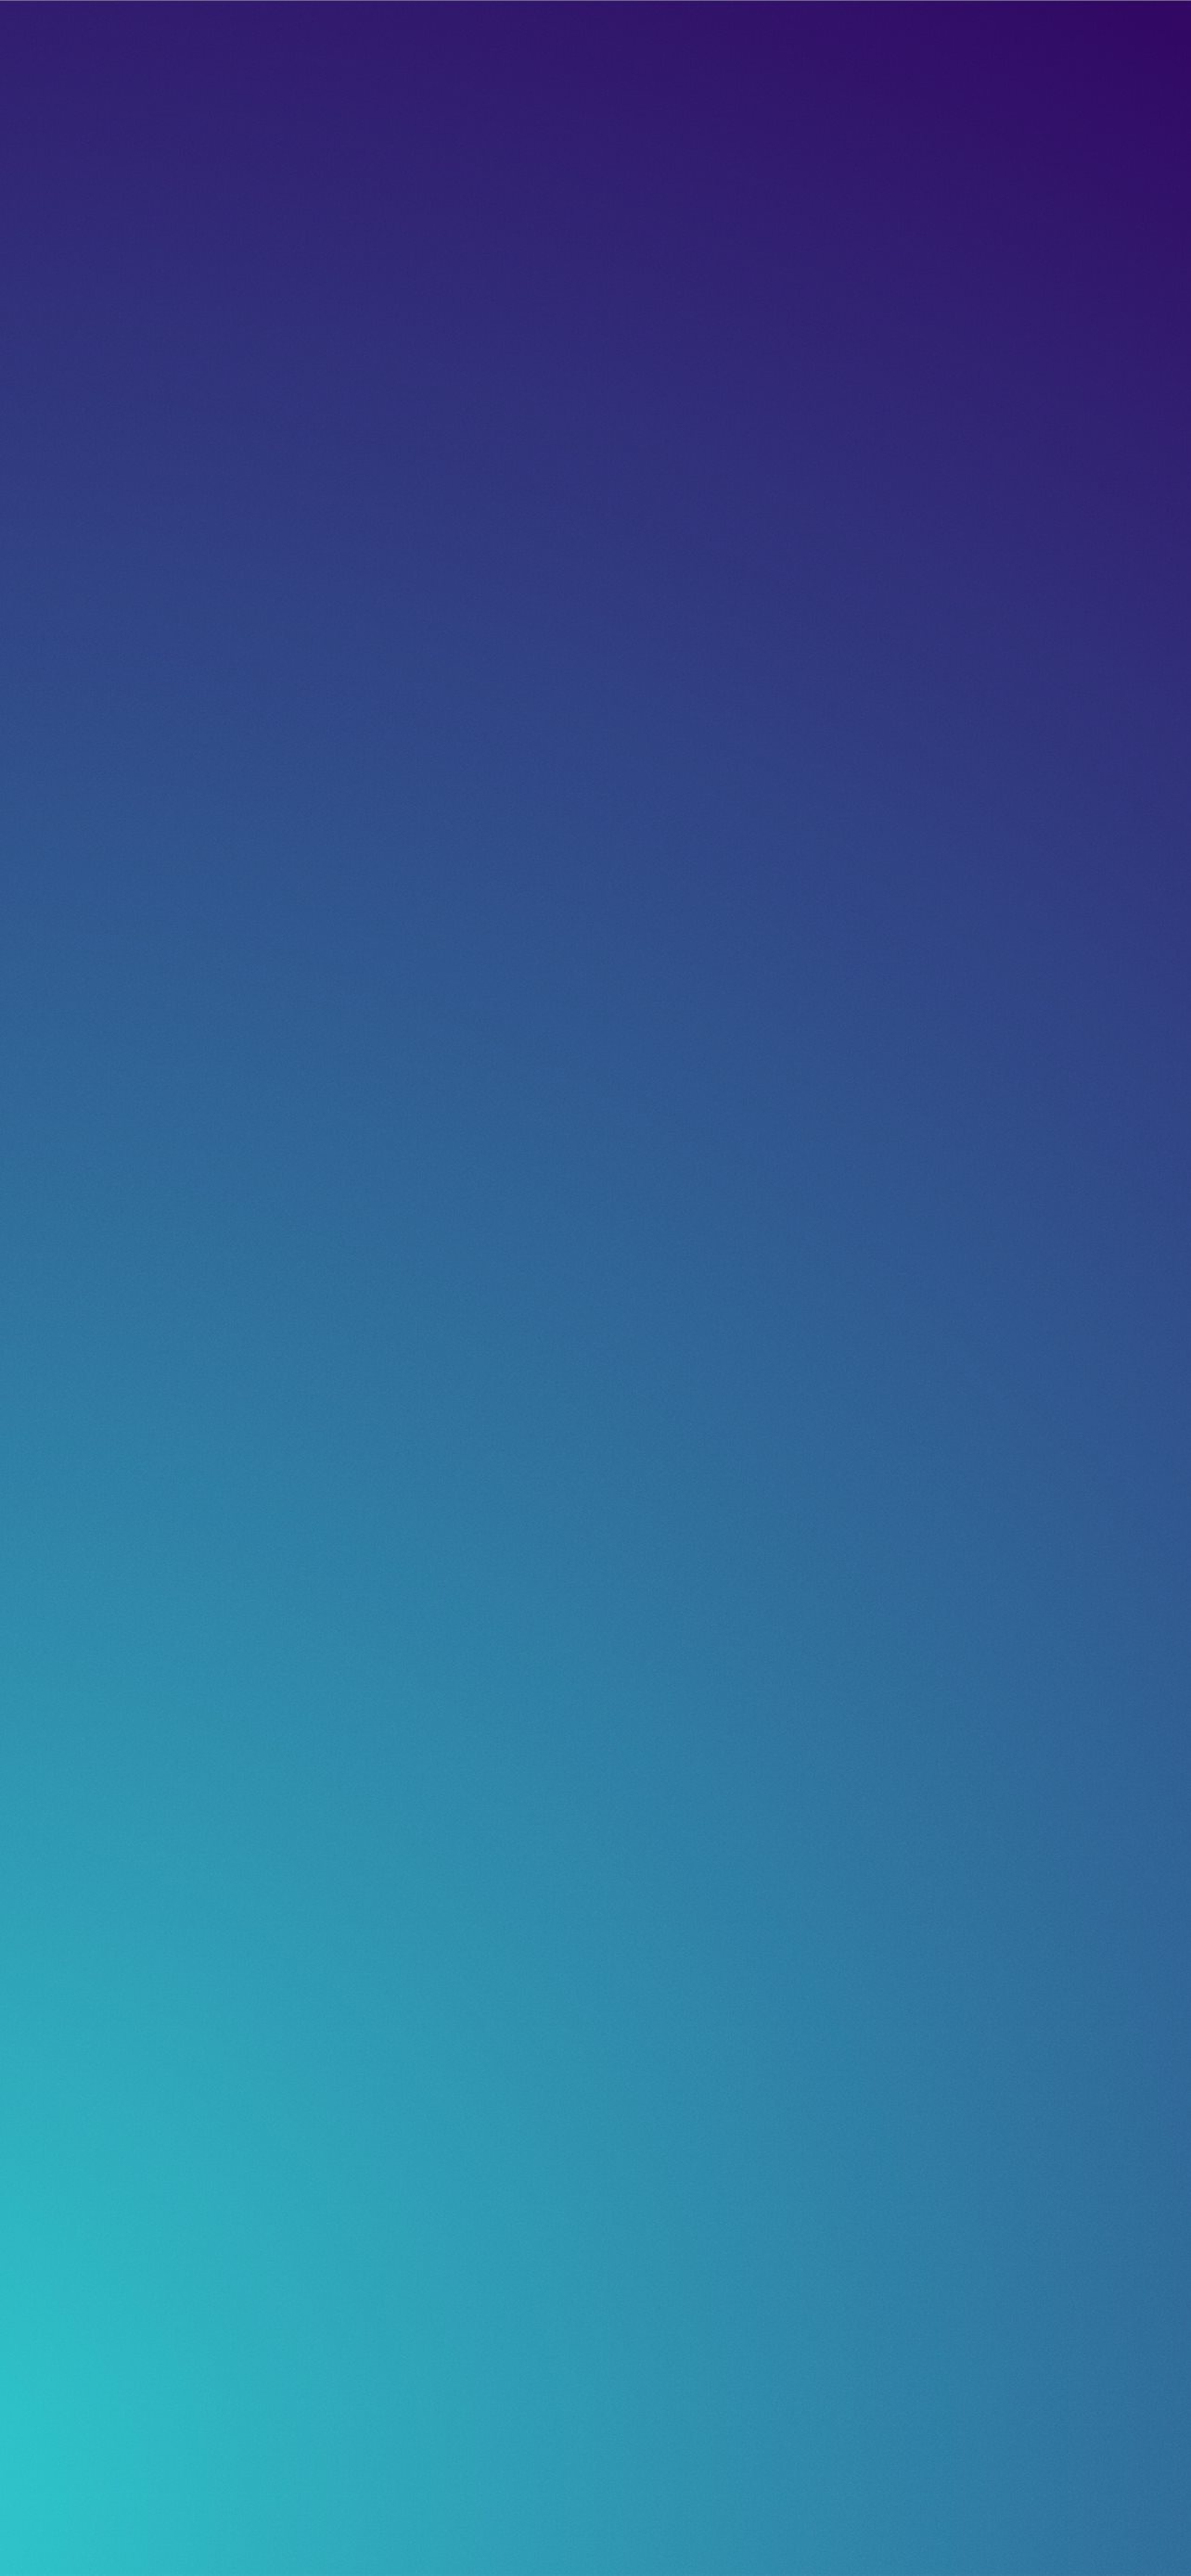 Light blue to dark blue gradient iPhone Wallpaper Free Download